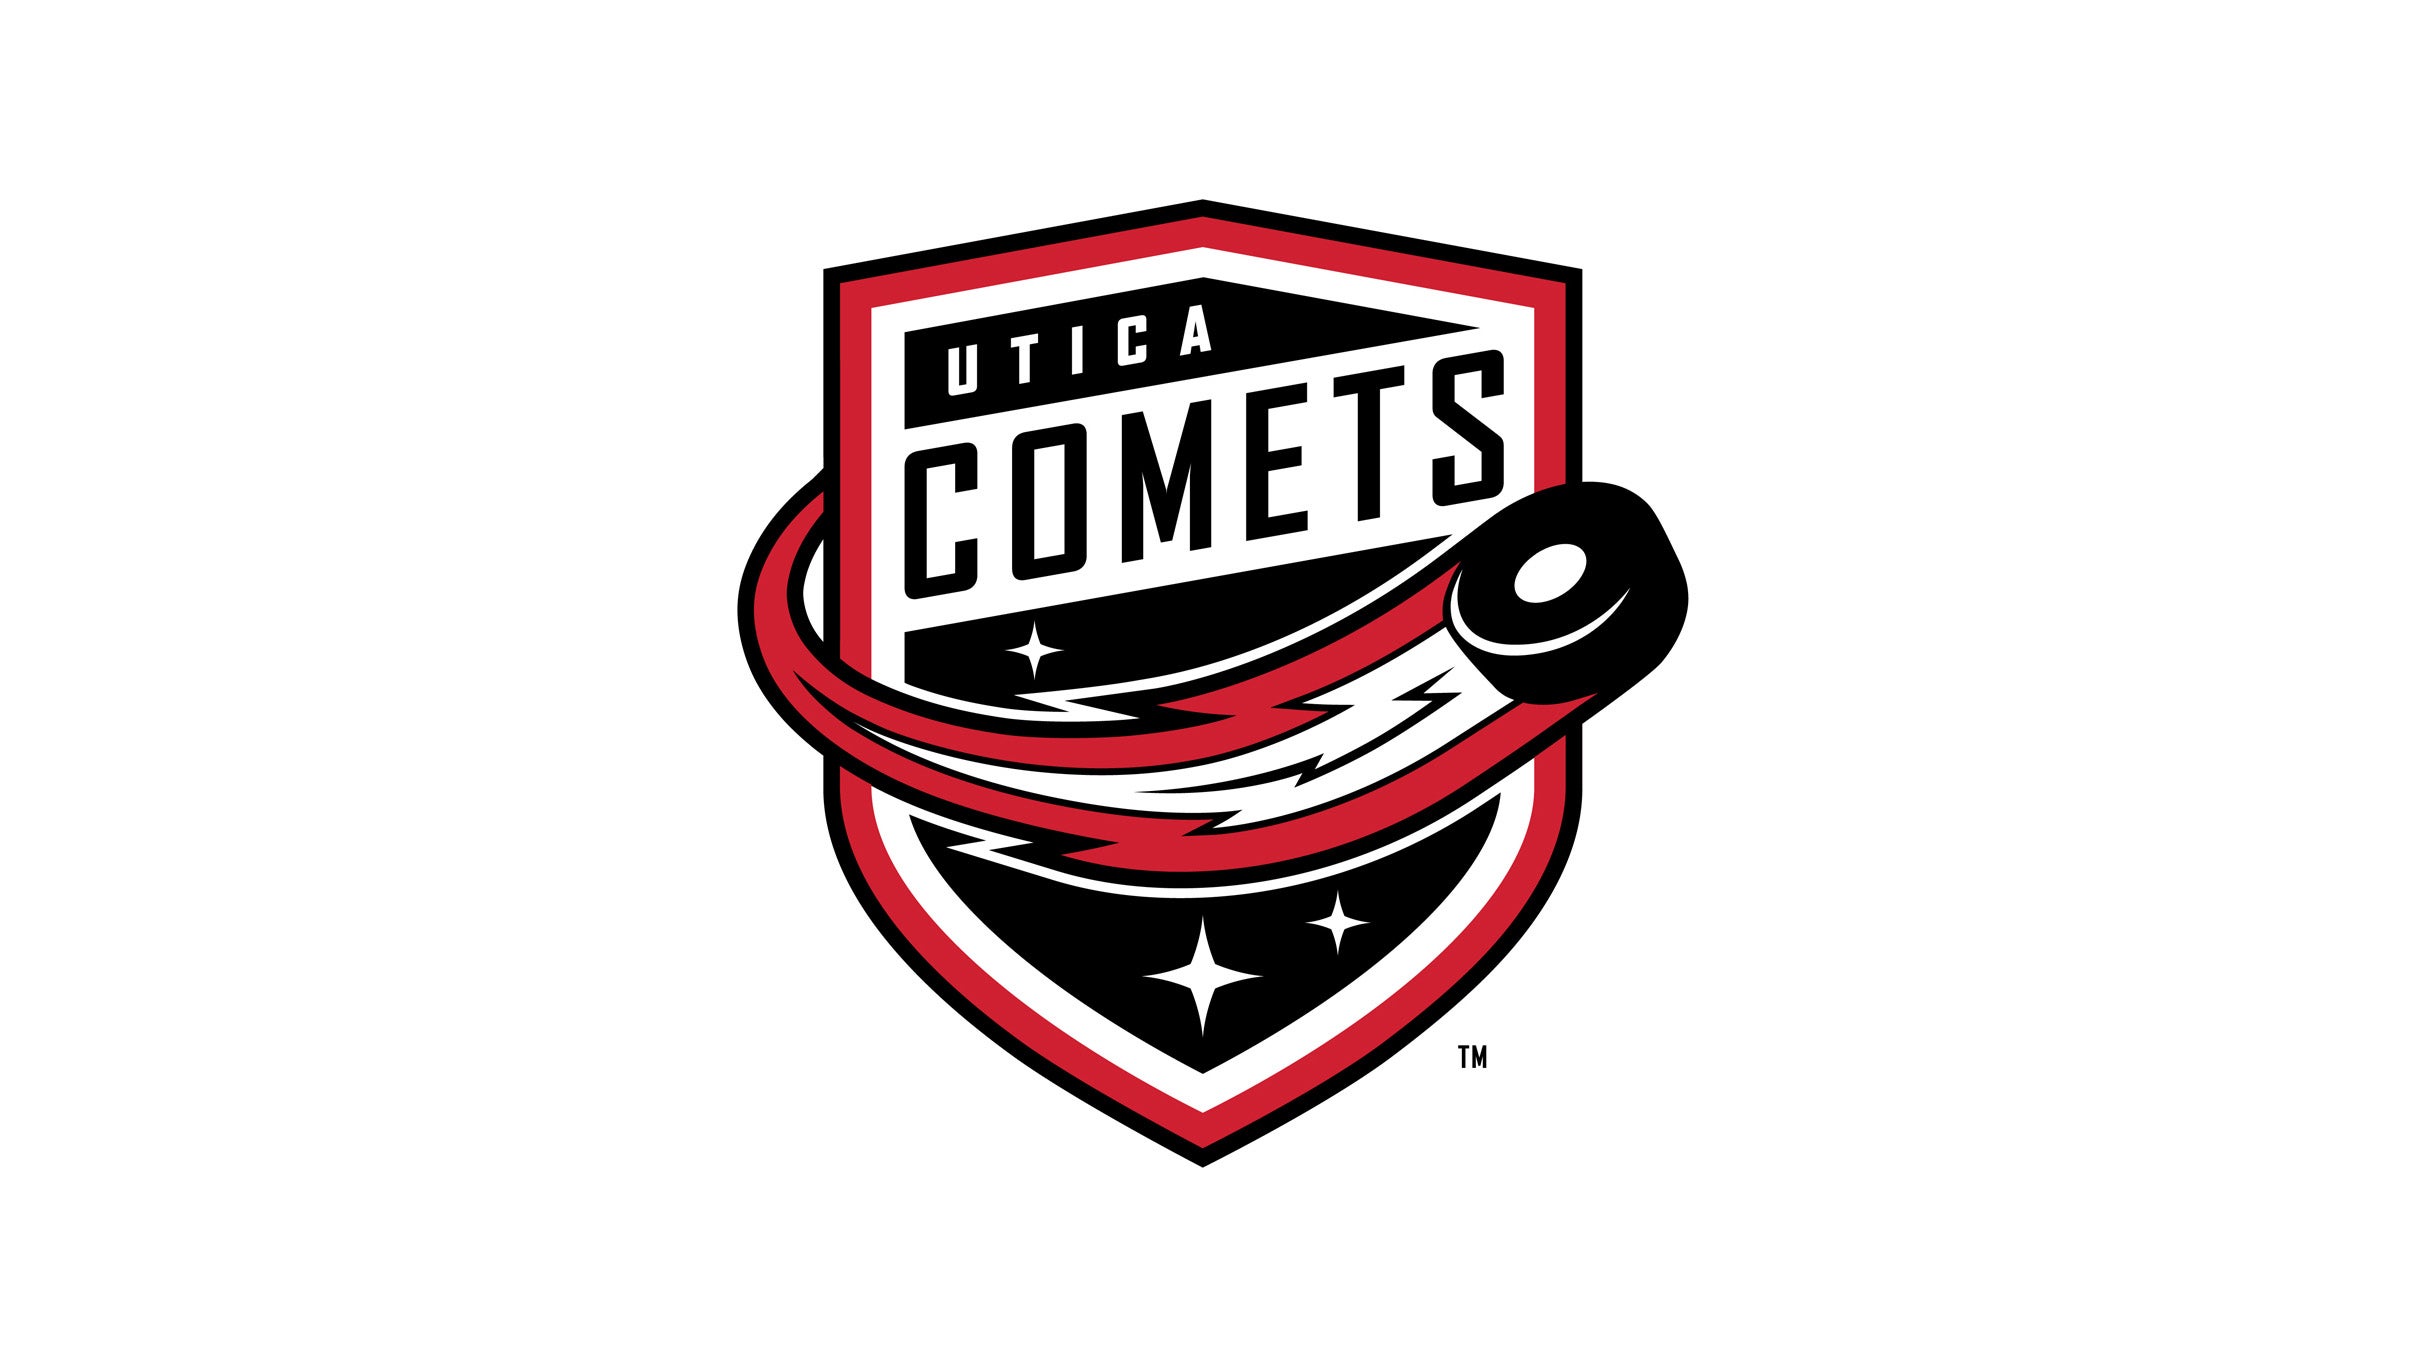 Utica Comets vs. Syracuse Crunch at Adirondack Bank Center